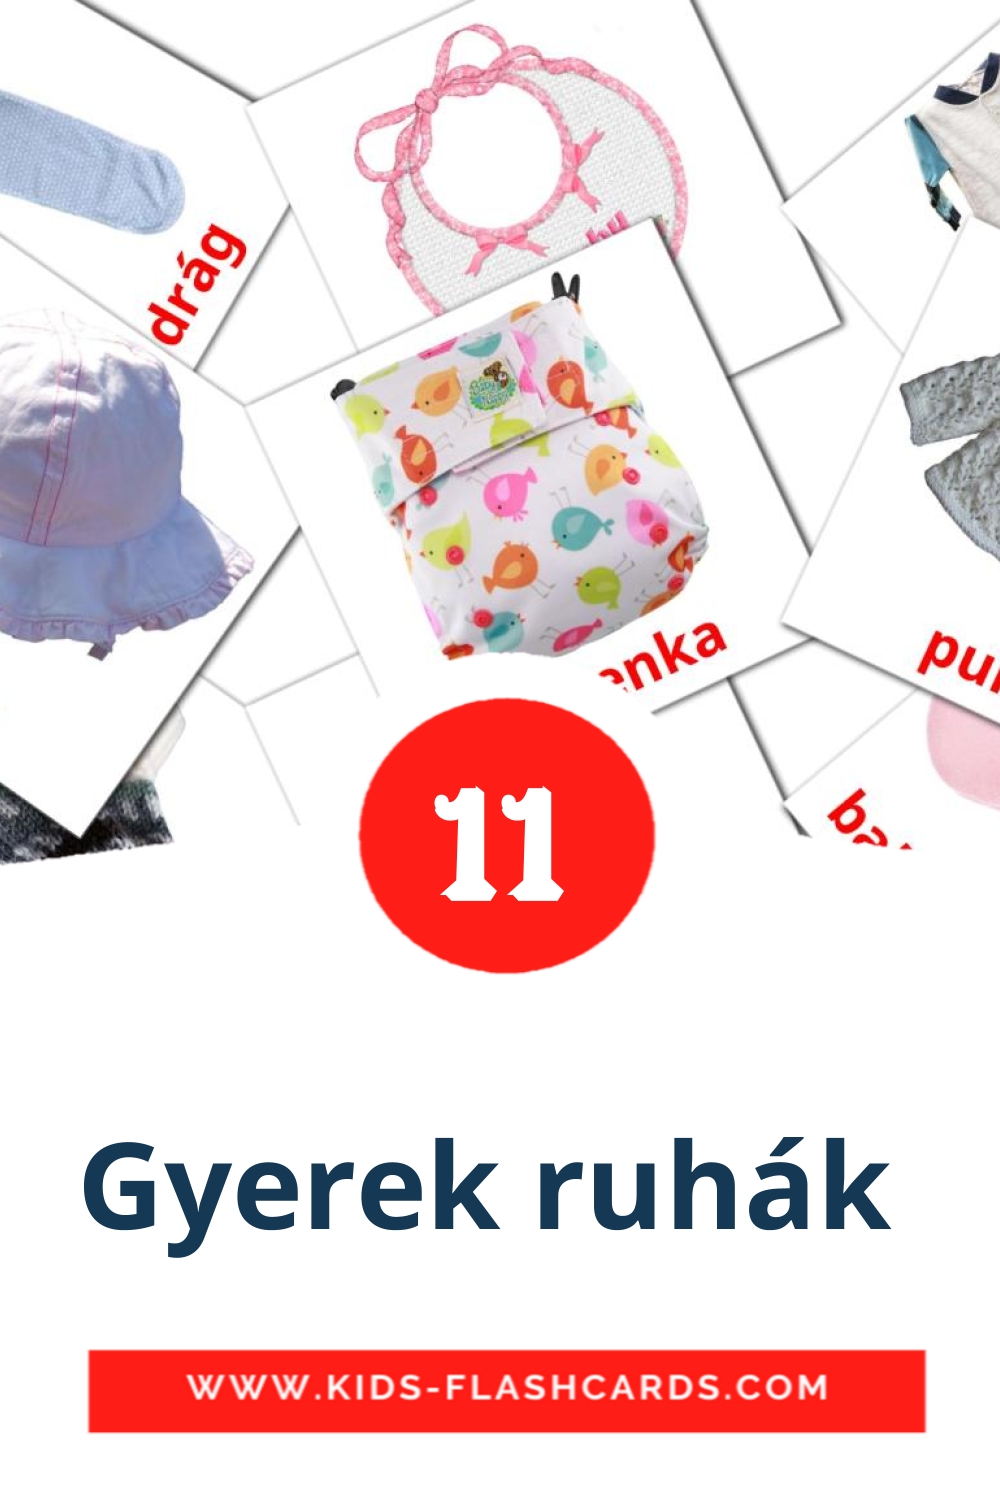 12 Gyerek ruhák  Picture Cards for Kindergarden in hungarian